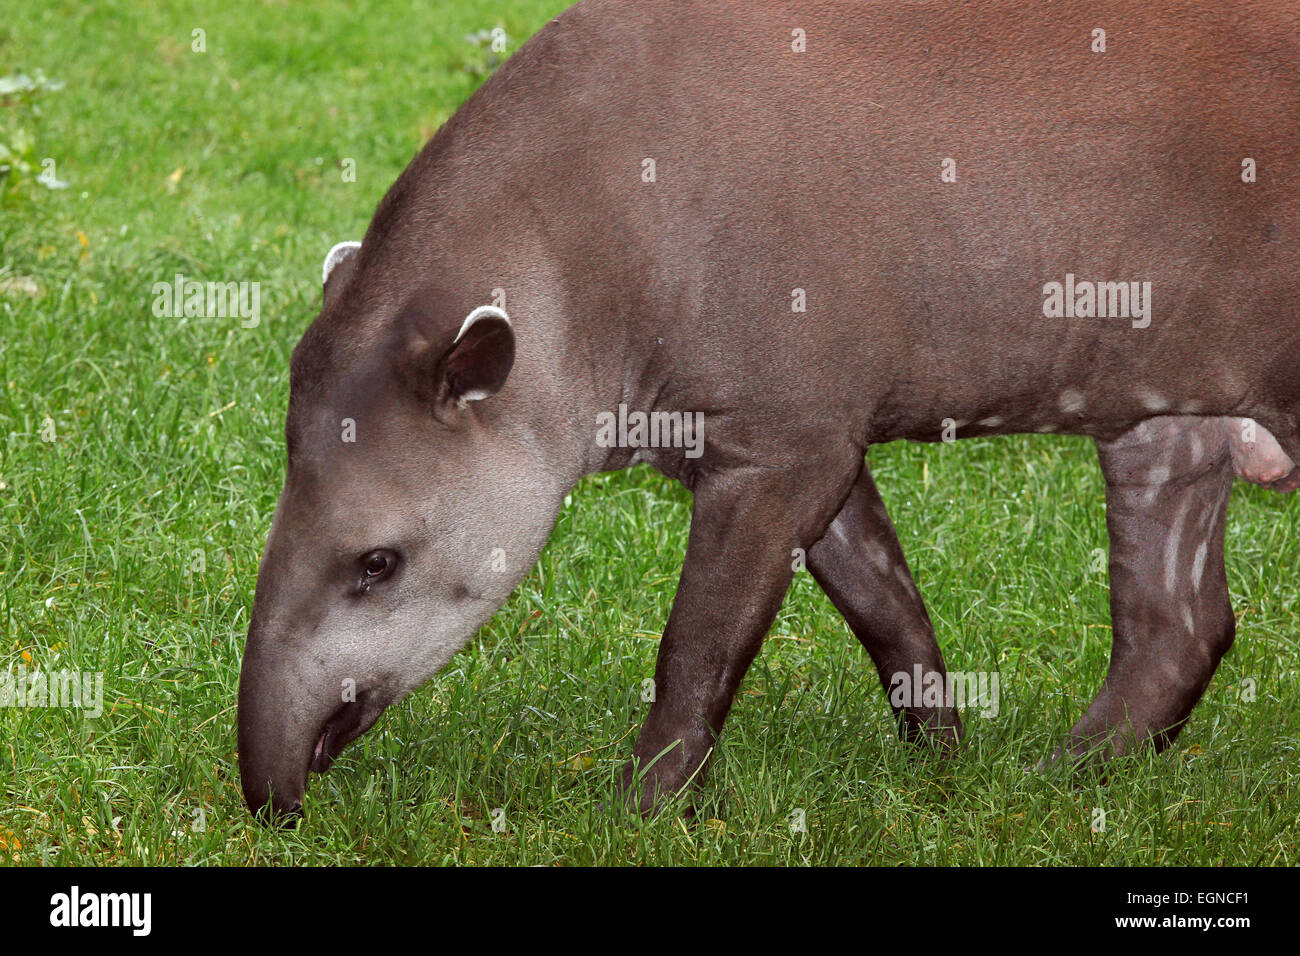 Sudamericano o Lowland tapir (Tapirus terrestris) Foto de stock